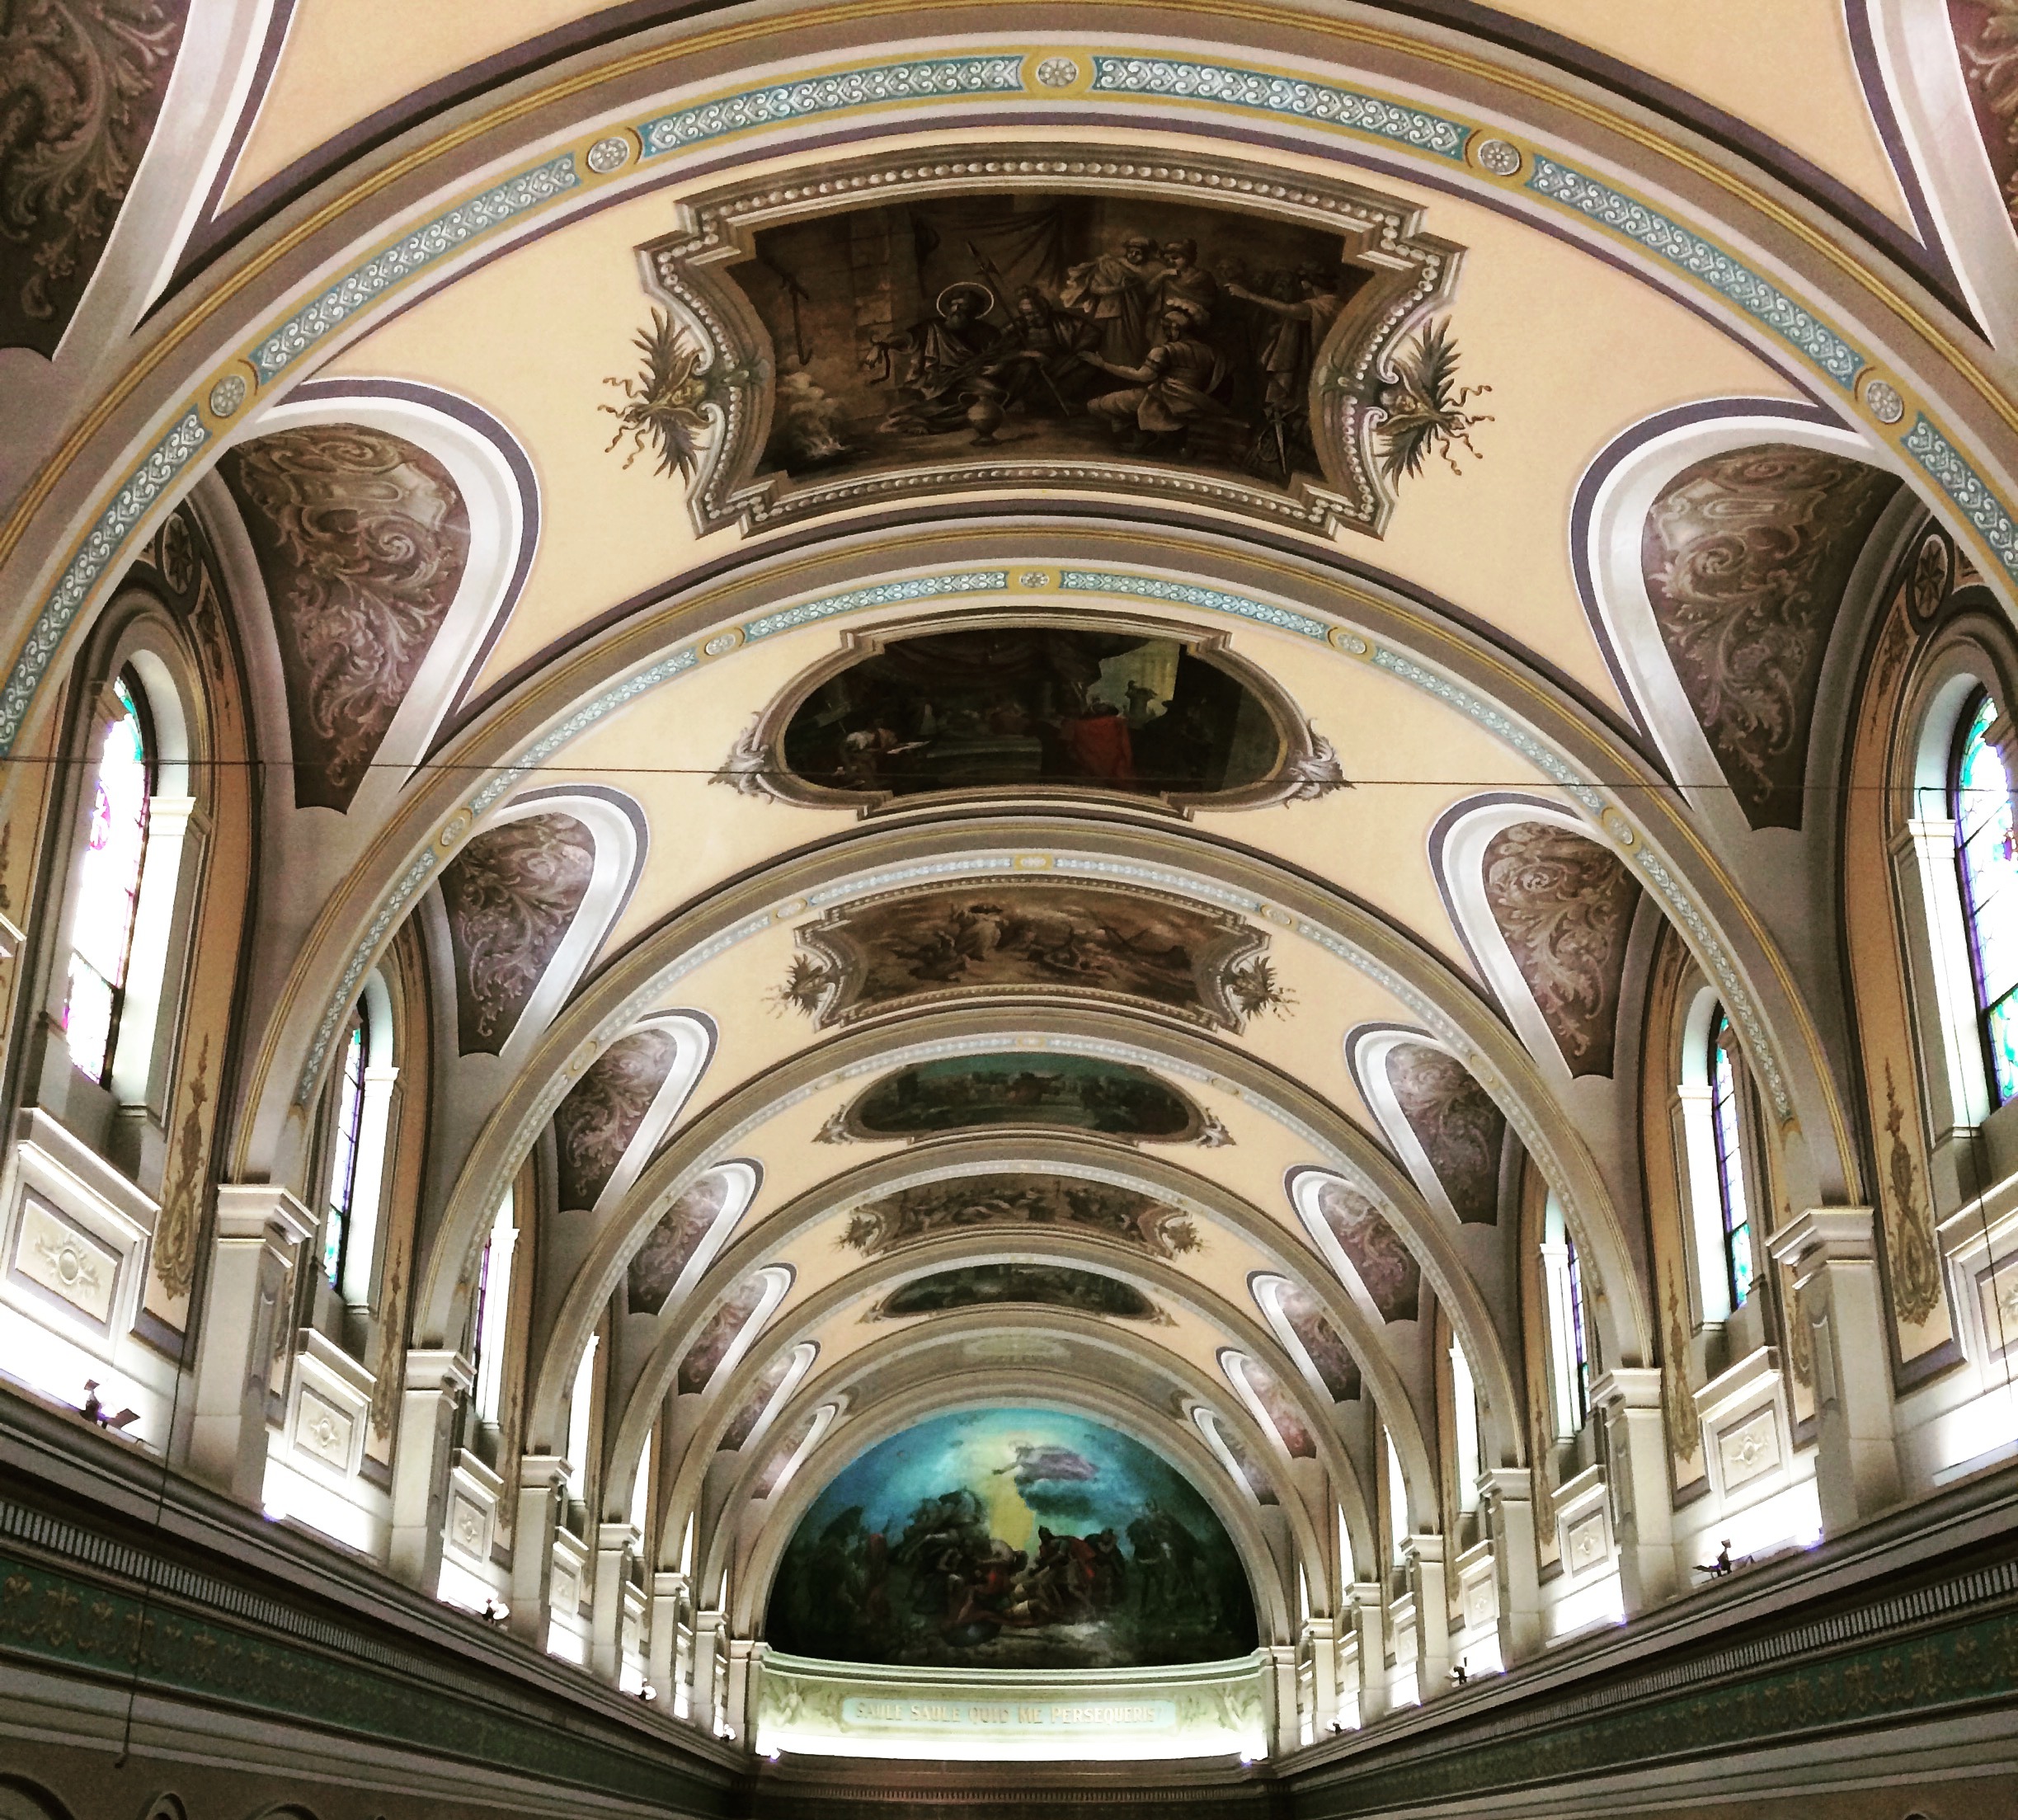 St. Paul's Basilica ceiling